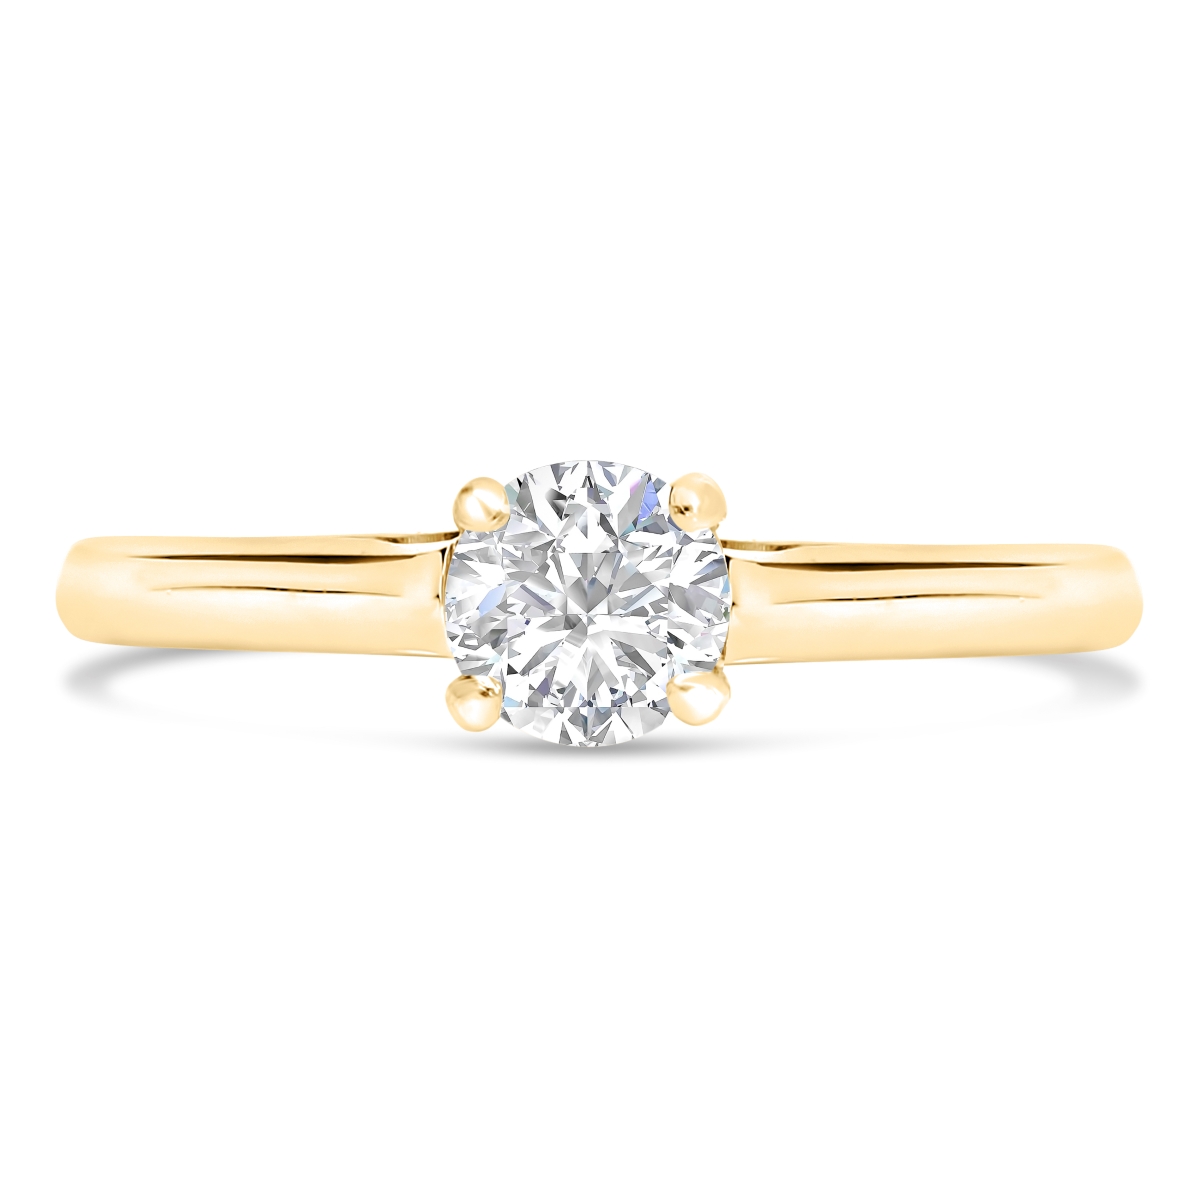 st-martin-solitaires-diamants-certifies-style-classique-or-jaune-750-